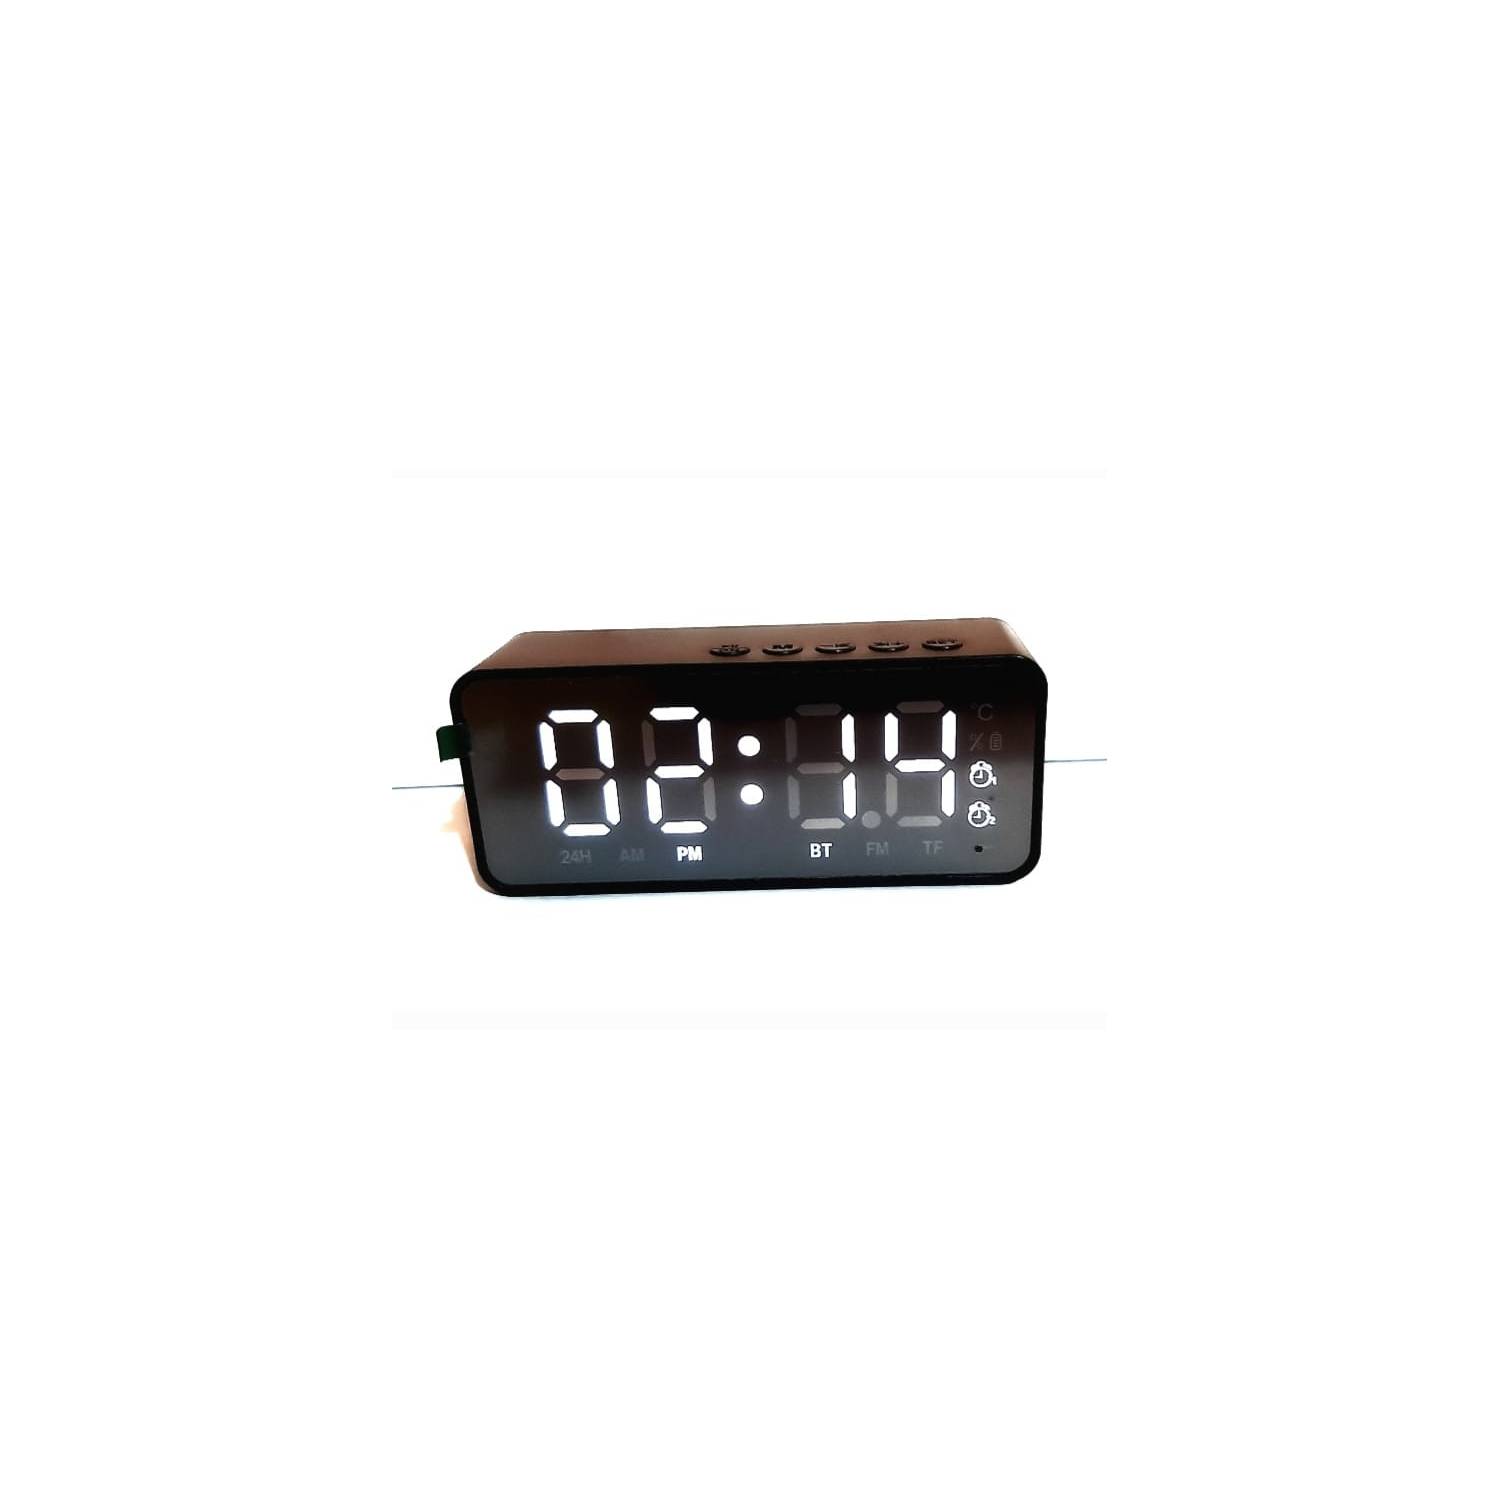 Radio reloj bluetooth despertador alarma inalámbrico recargable luz led FM  NUEVO